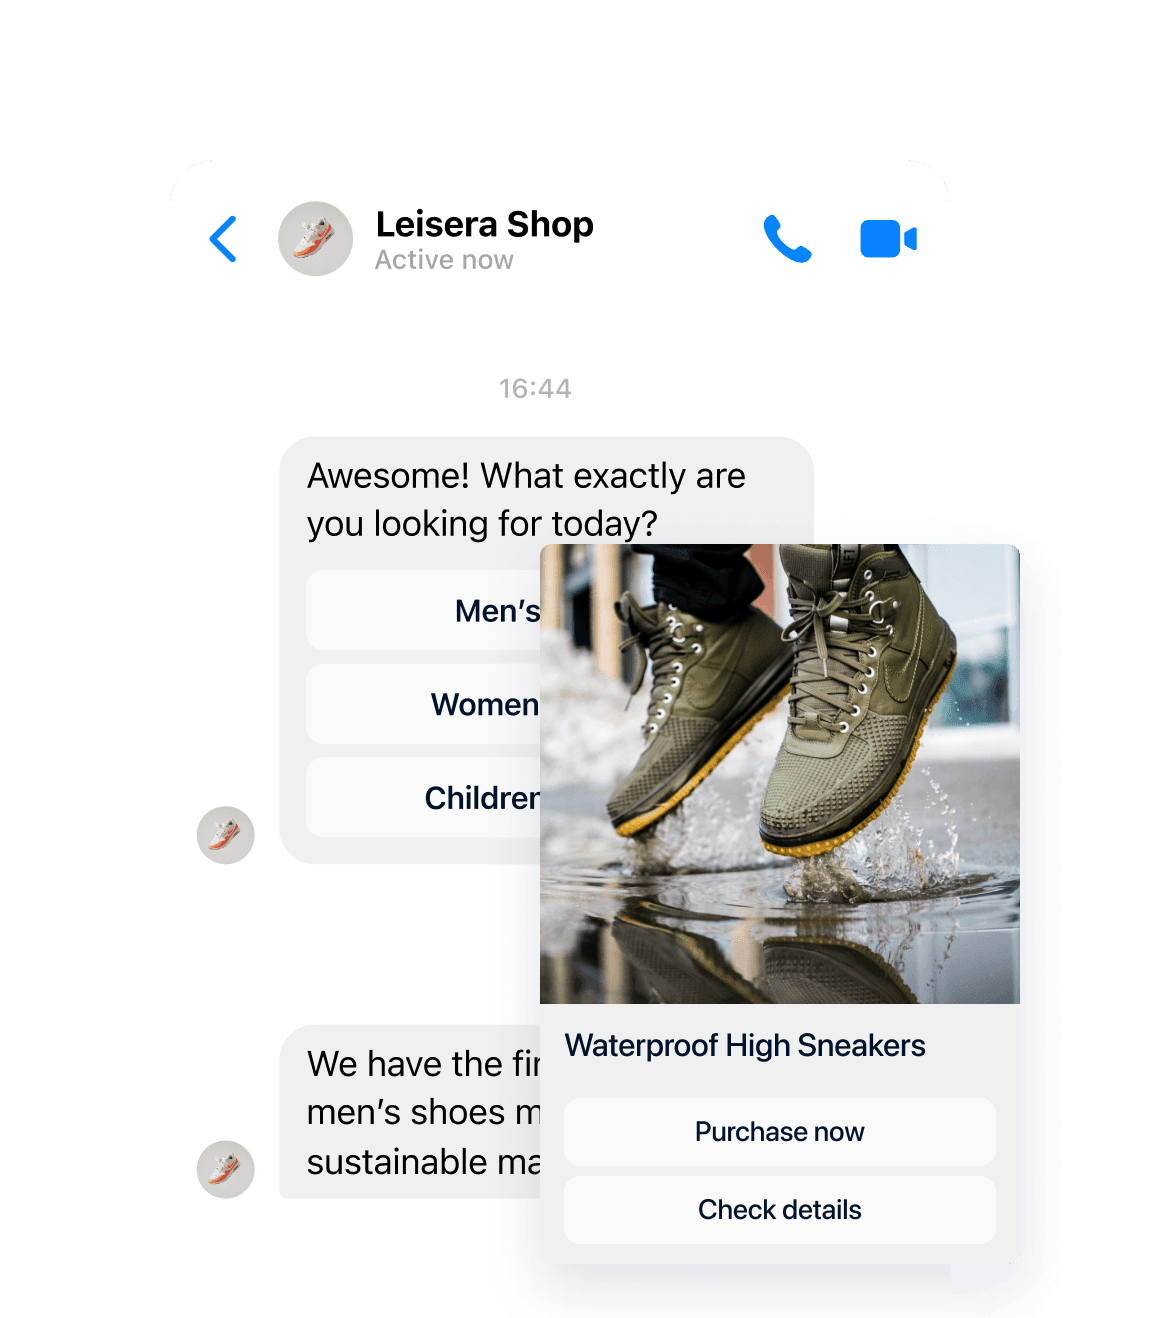 Conversación en Messenger mediante bots